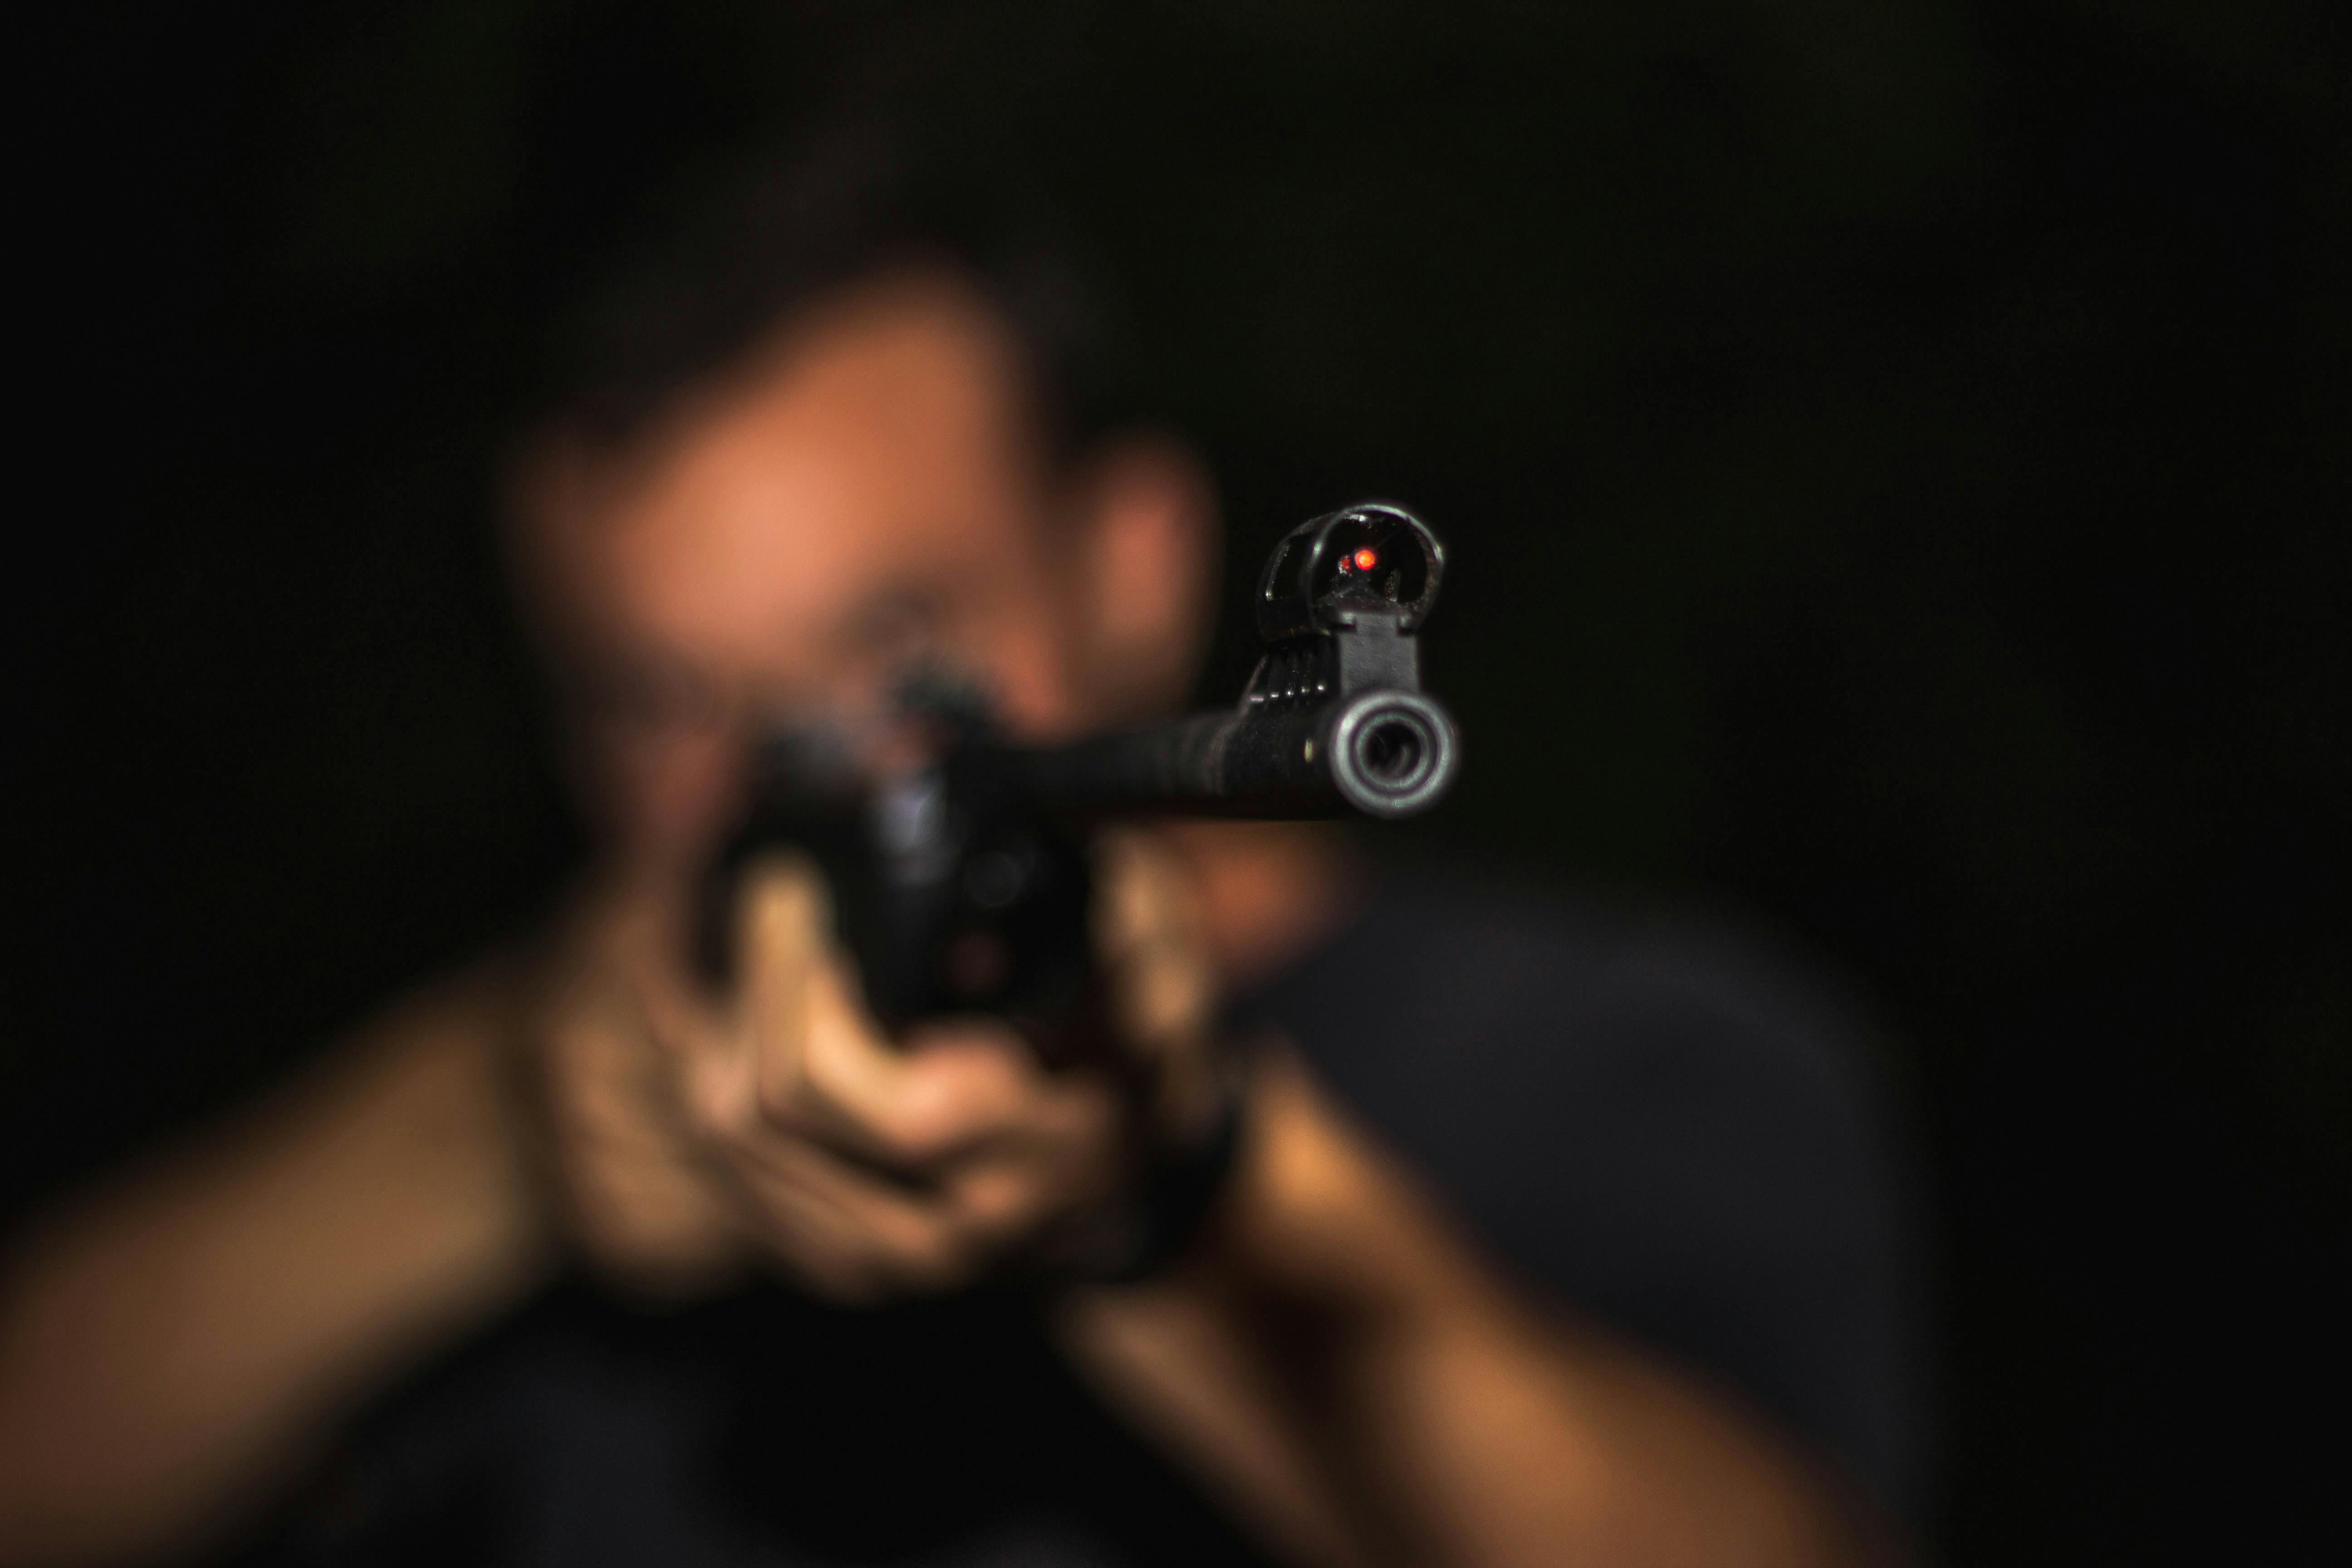 Gun Shot Pictures  Download Free Images on Unsplash